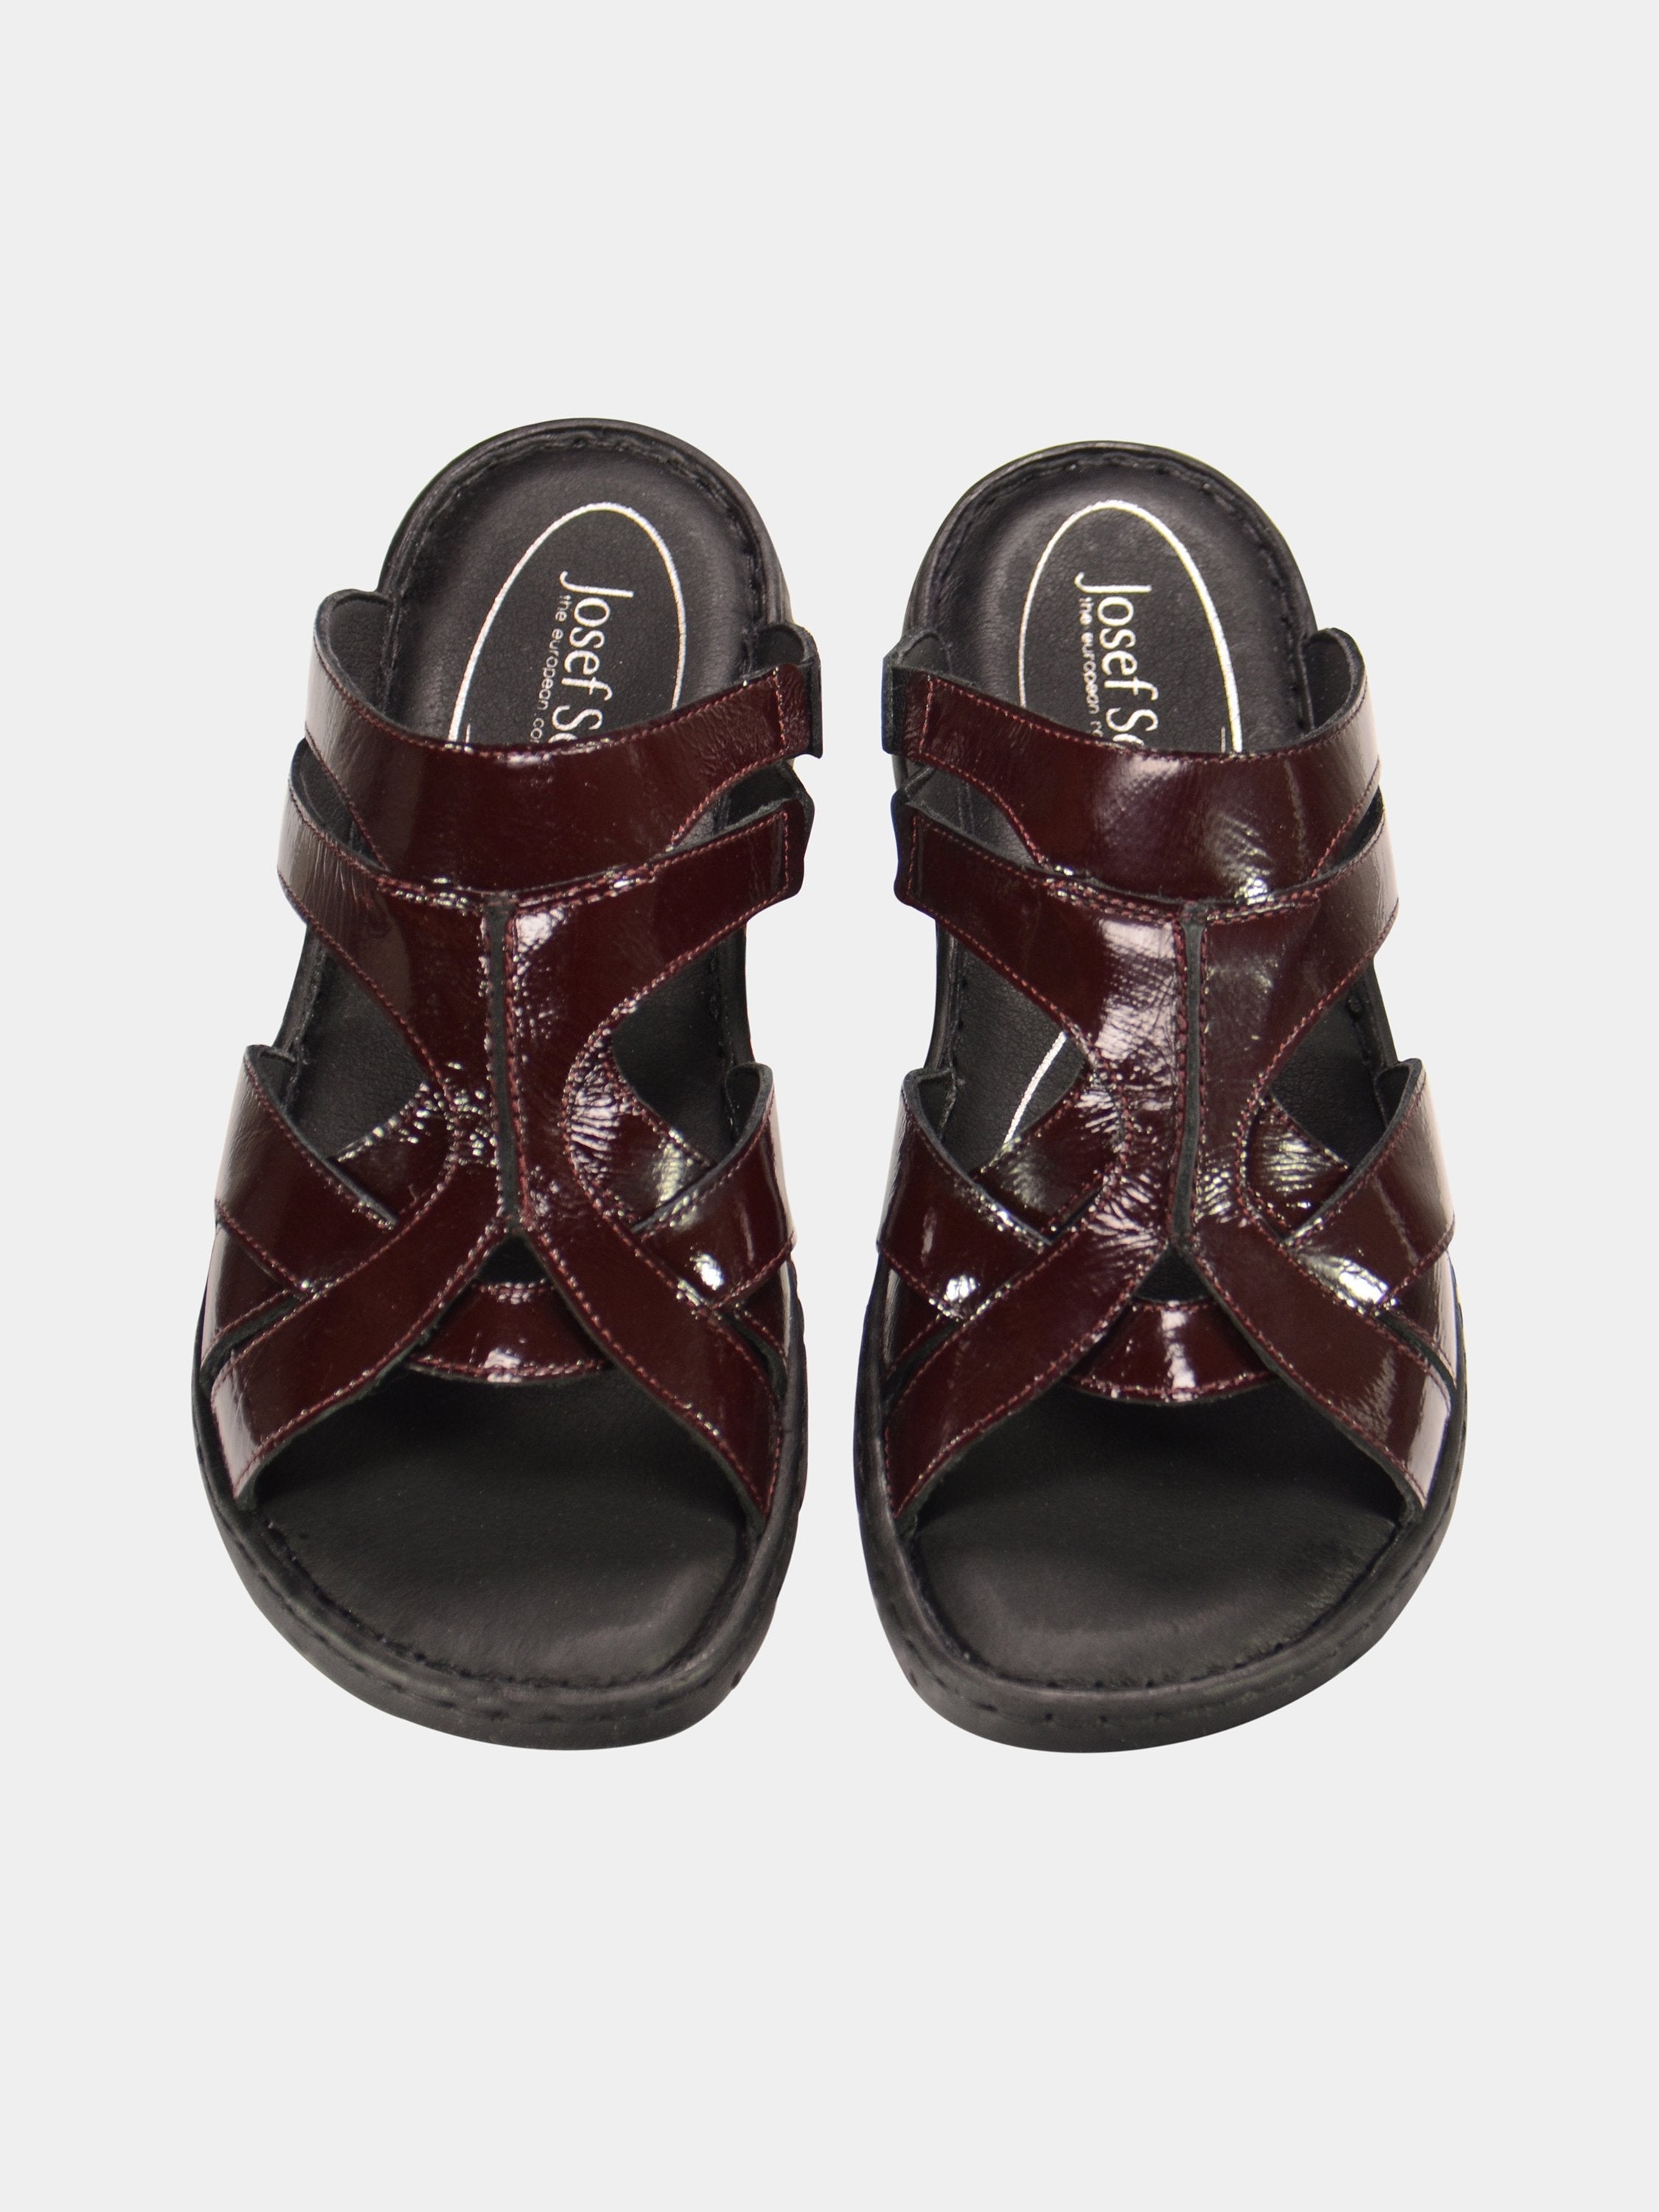 Josef Seibel Women's Patent Leather Slider Sandals #color_Maroon